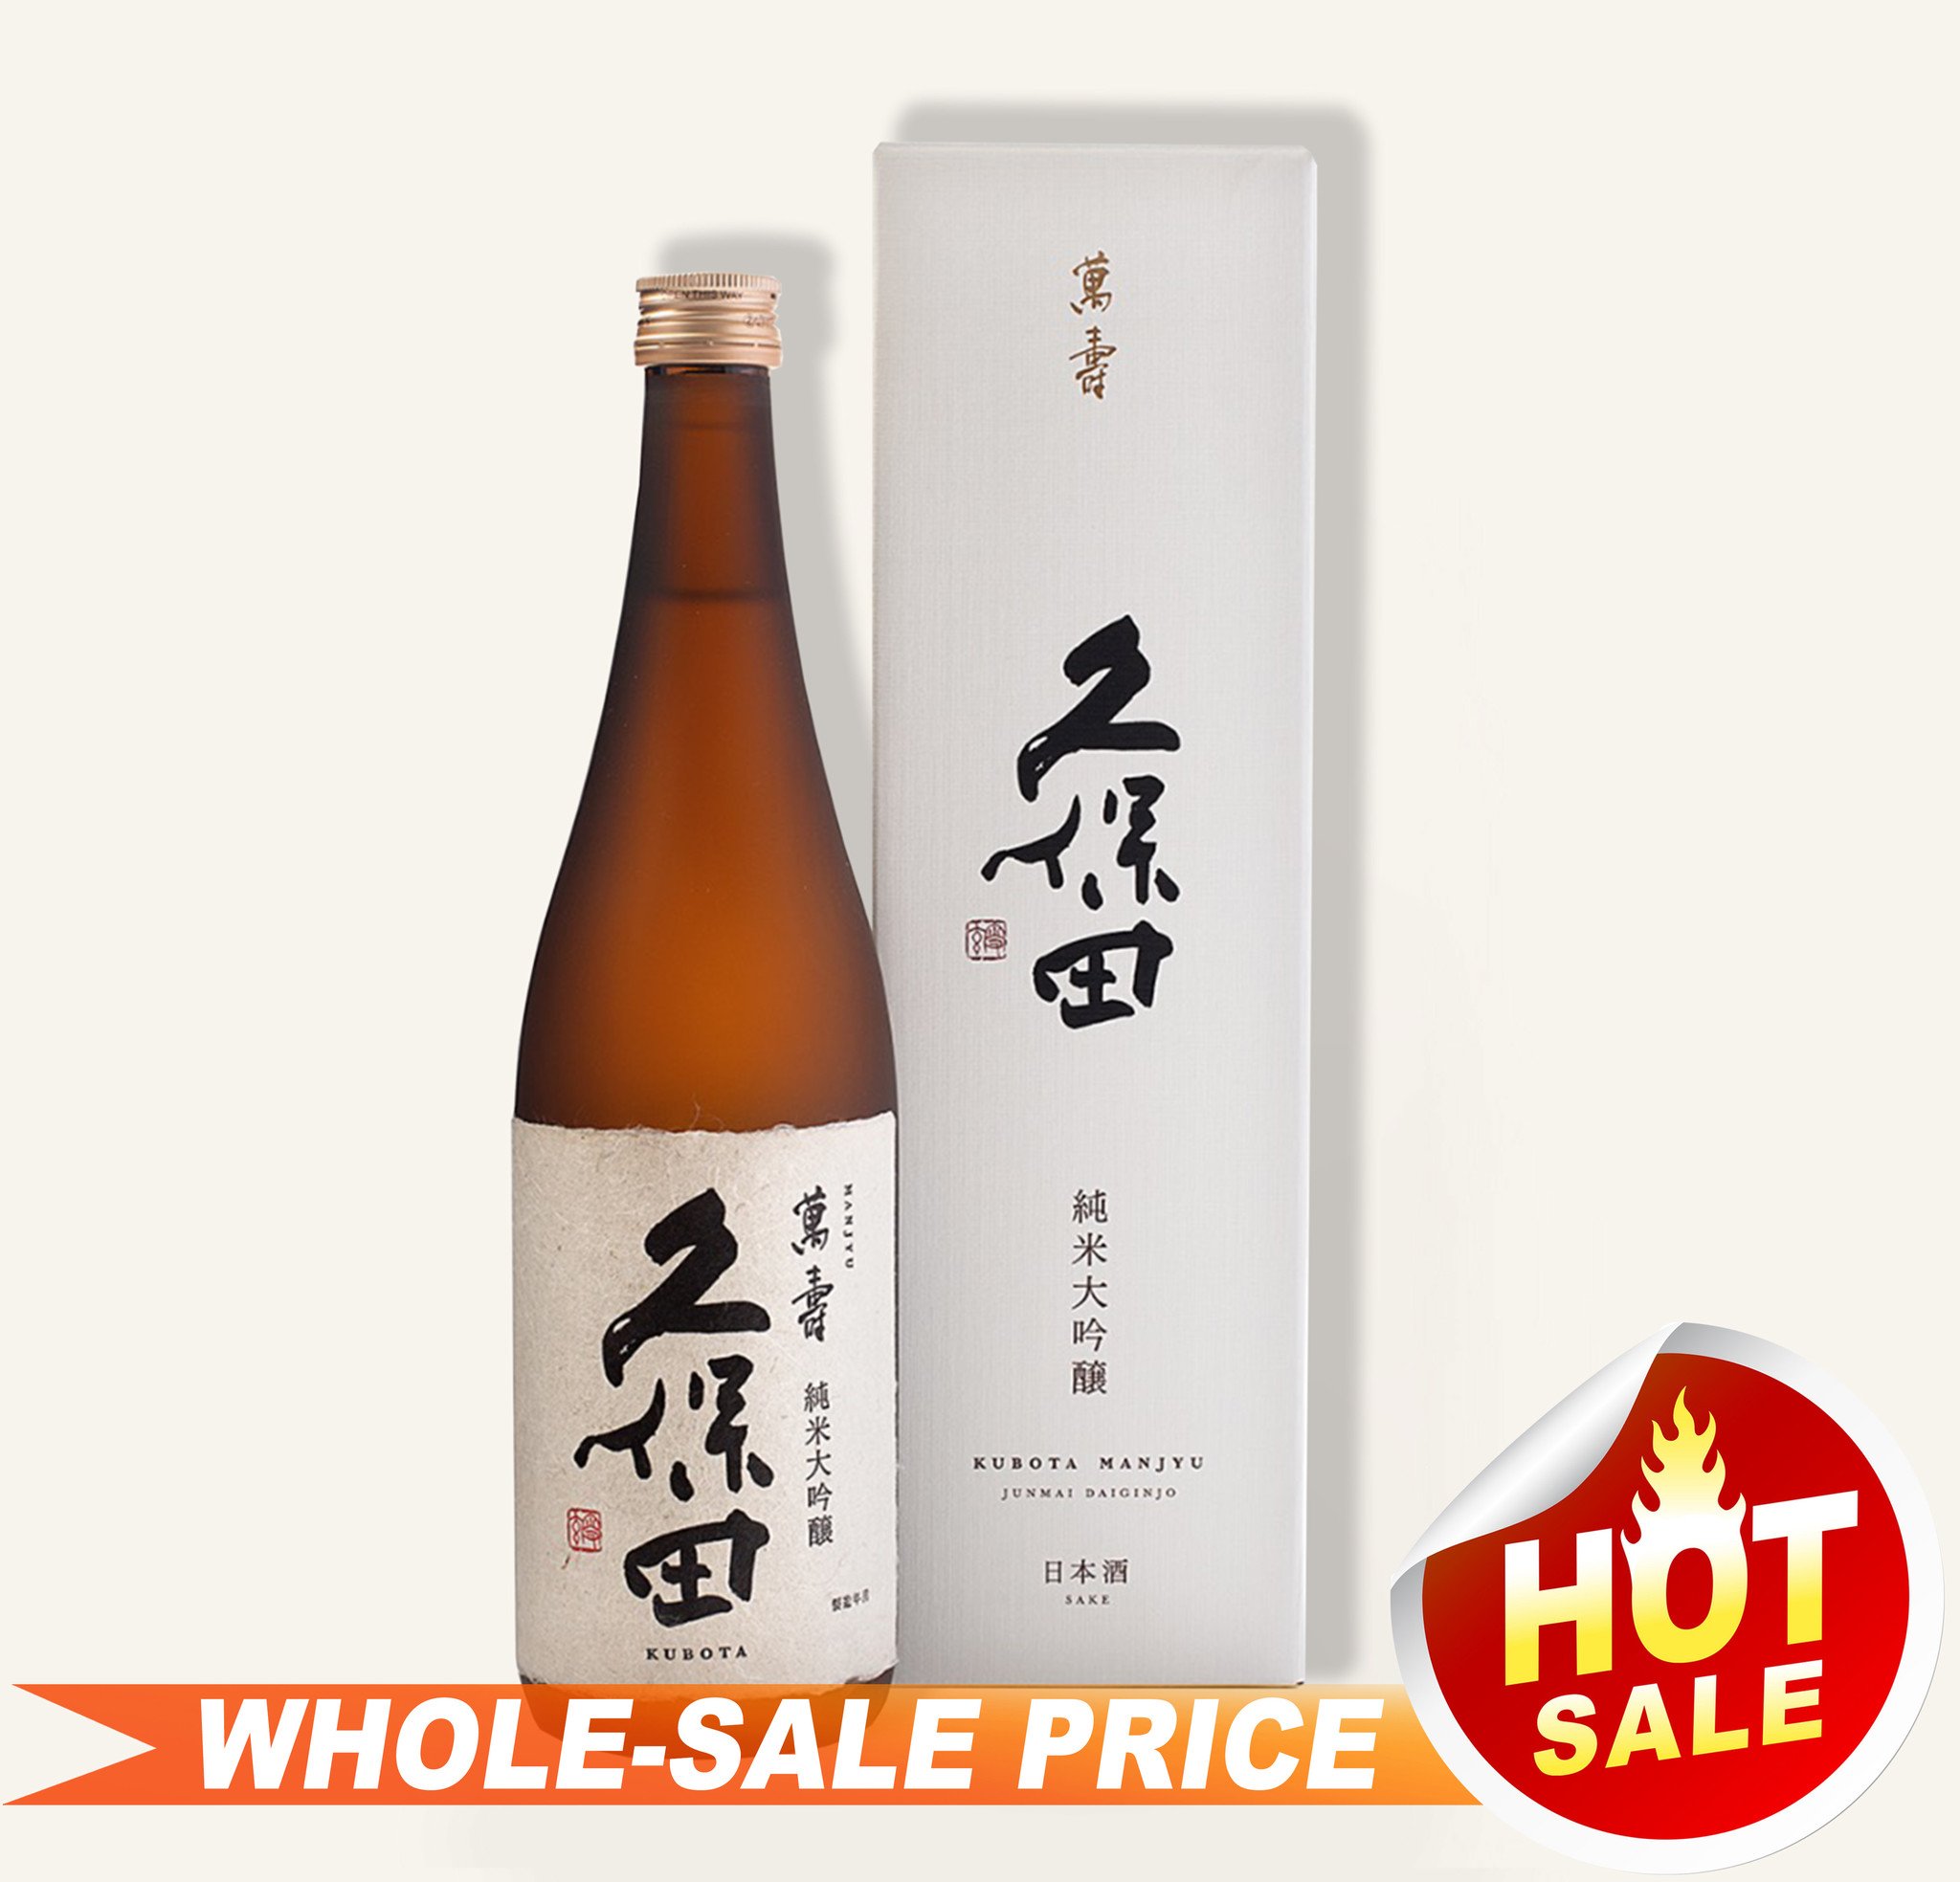 Kubota Manju Junmai Daiginjo 久保田万寿 720ML$65 日本酒批发价 